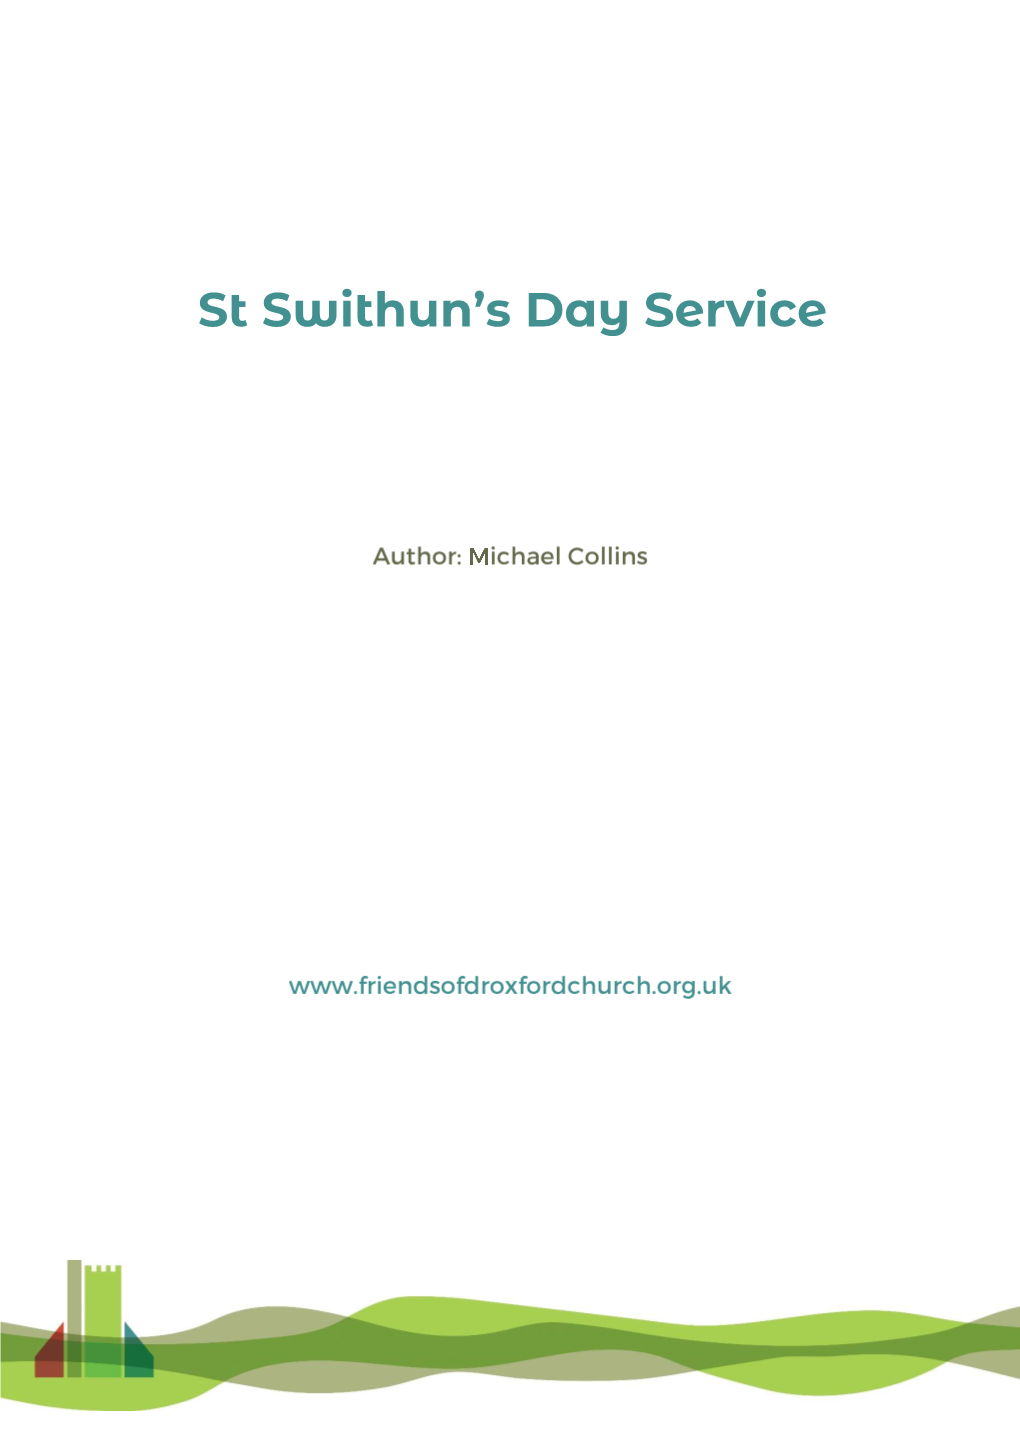 St Swithun's Day Service